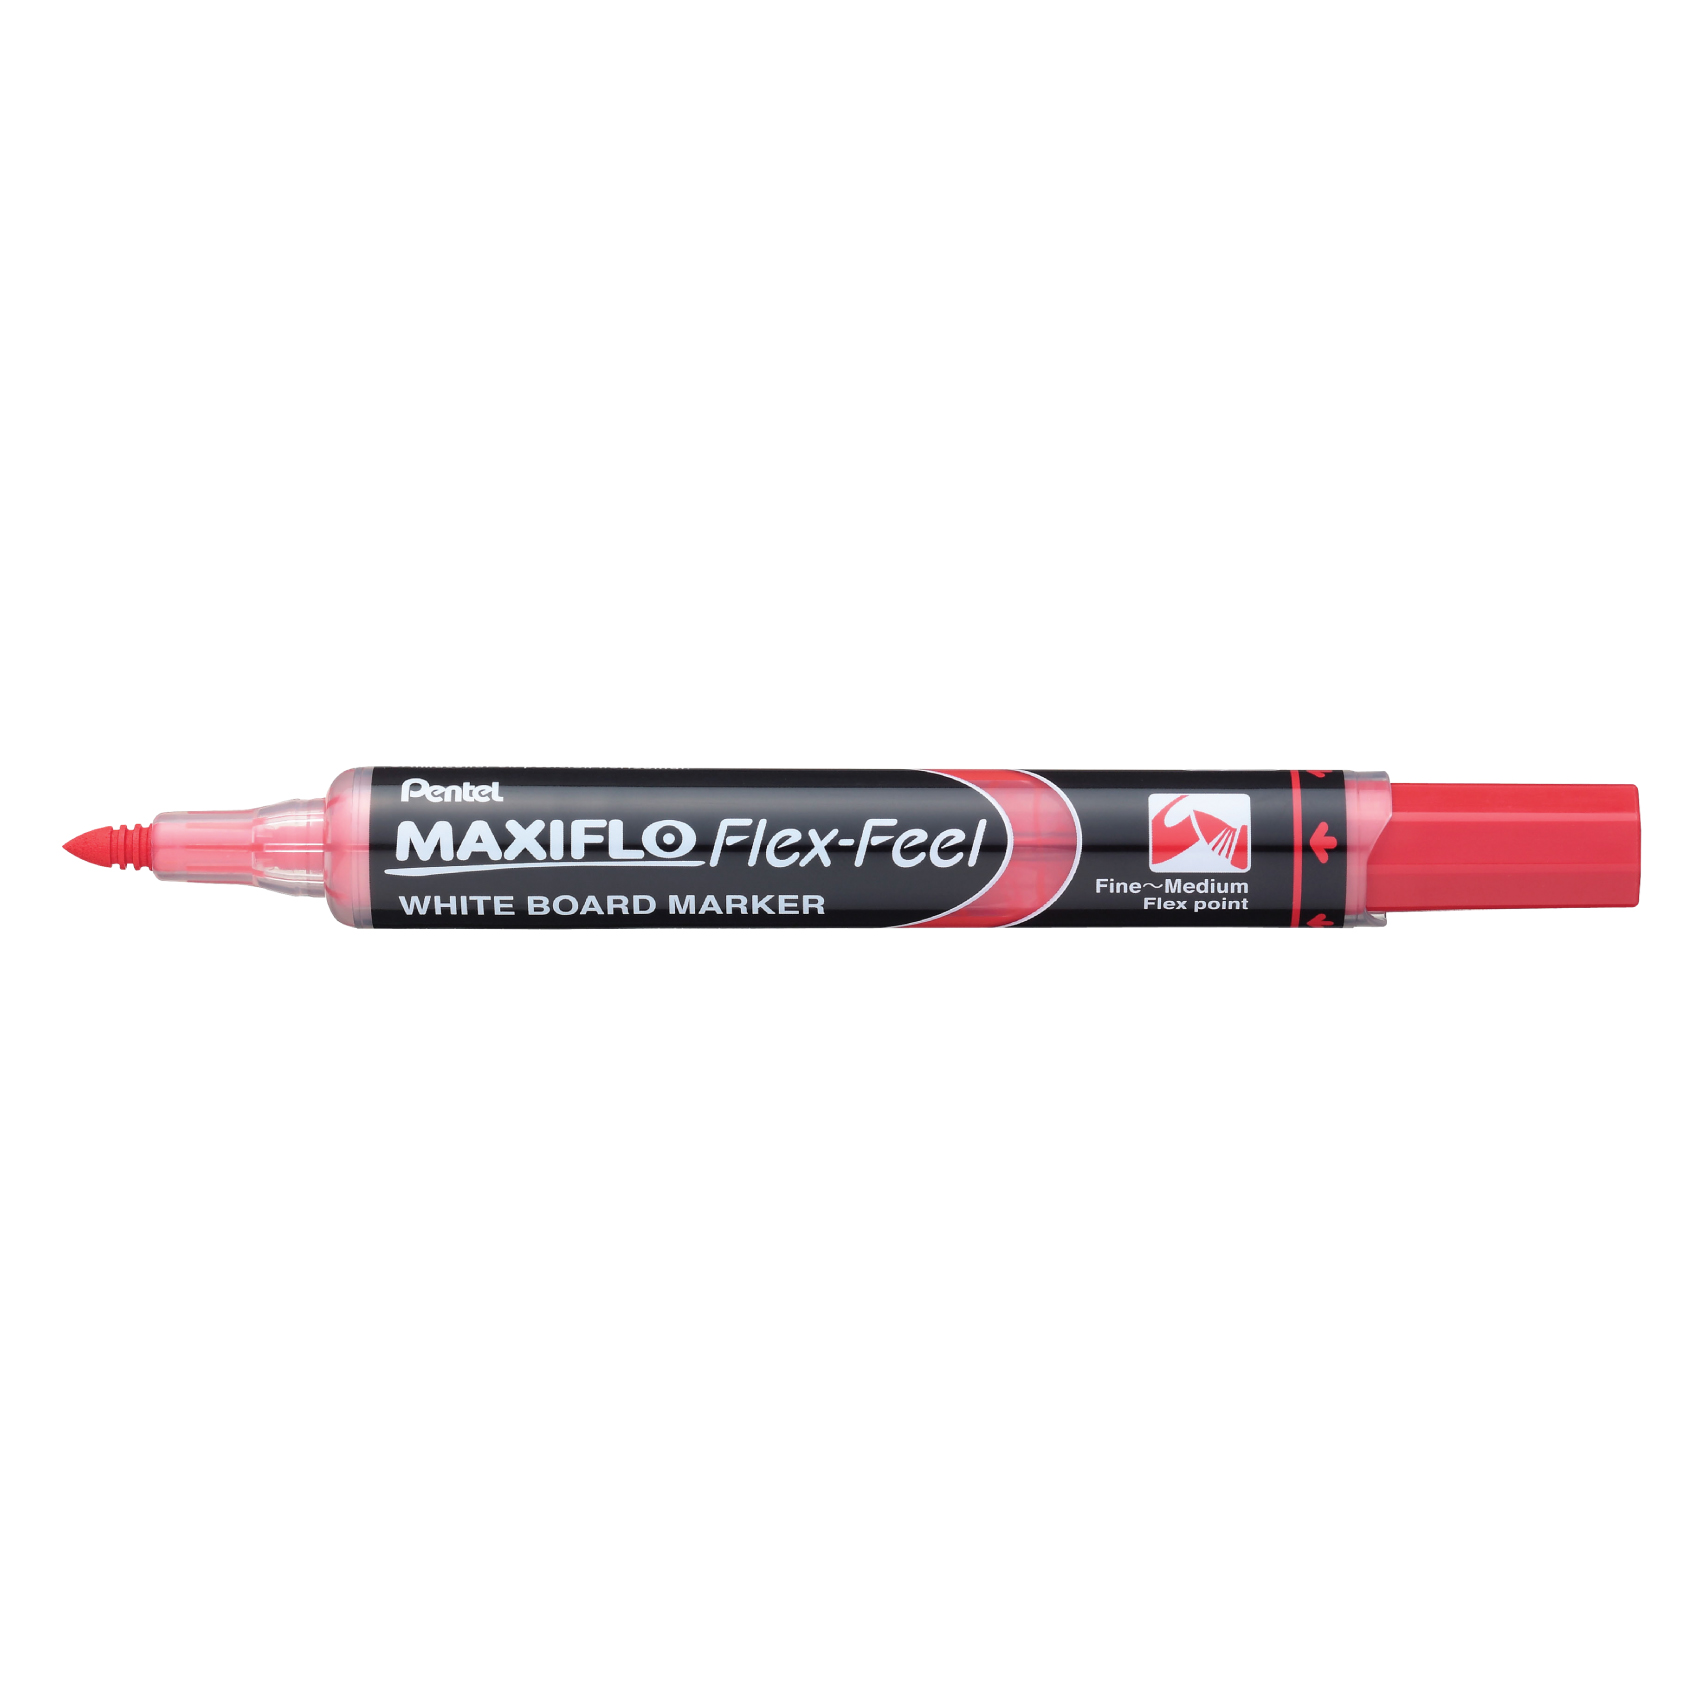 Maxiflo Wb Marker Flex-Feel Rd